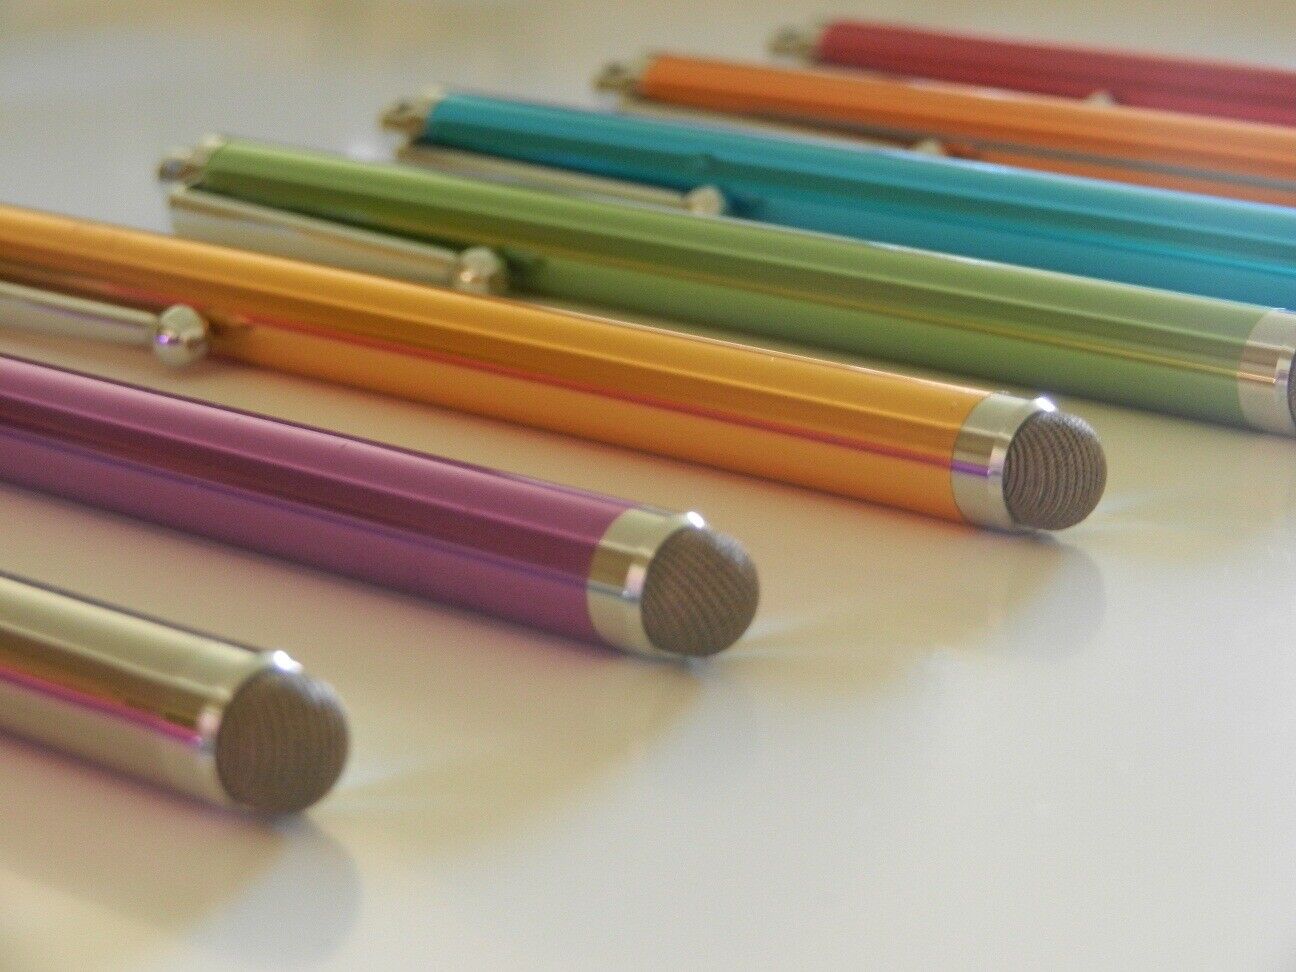 Wholesale 100 x Color Fiber Tip Metal Stylus Pen Universal iPhone iPad Galaxy